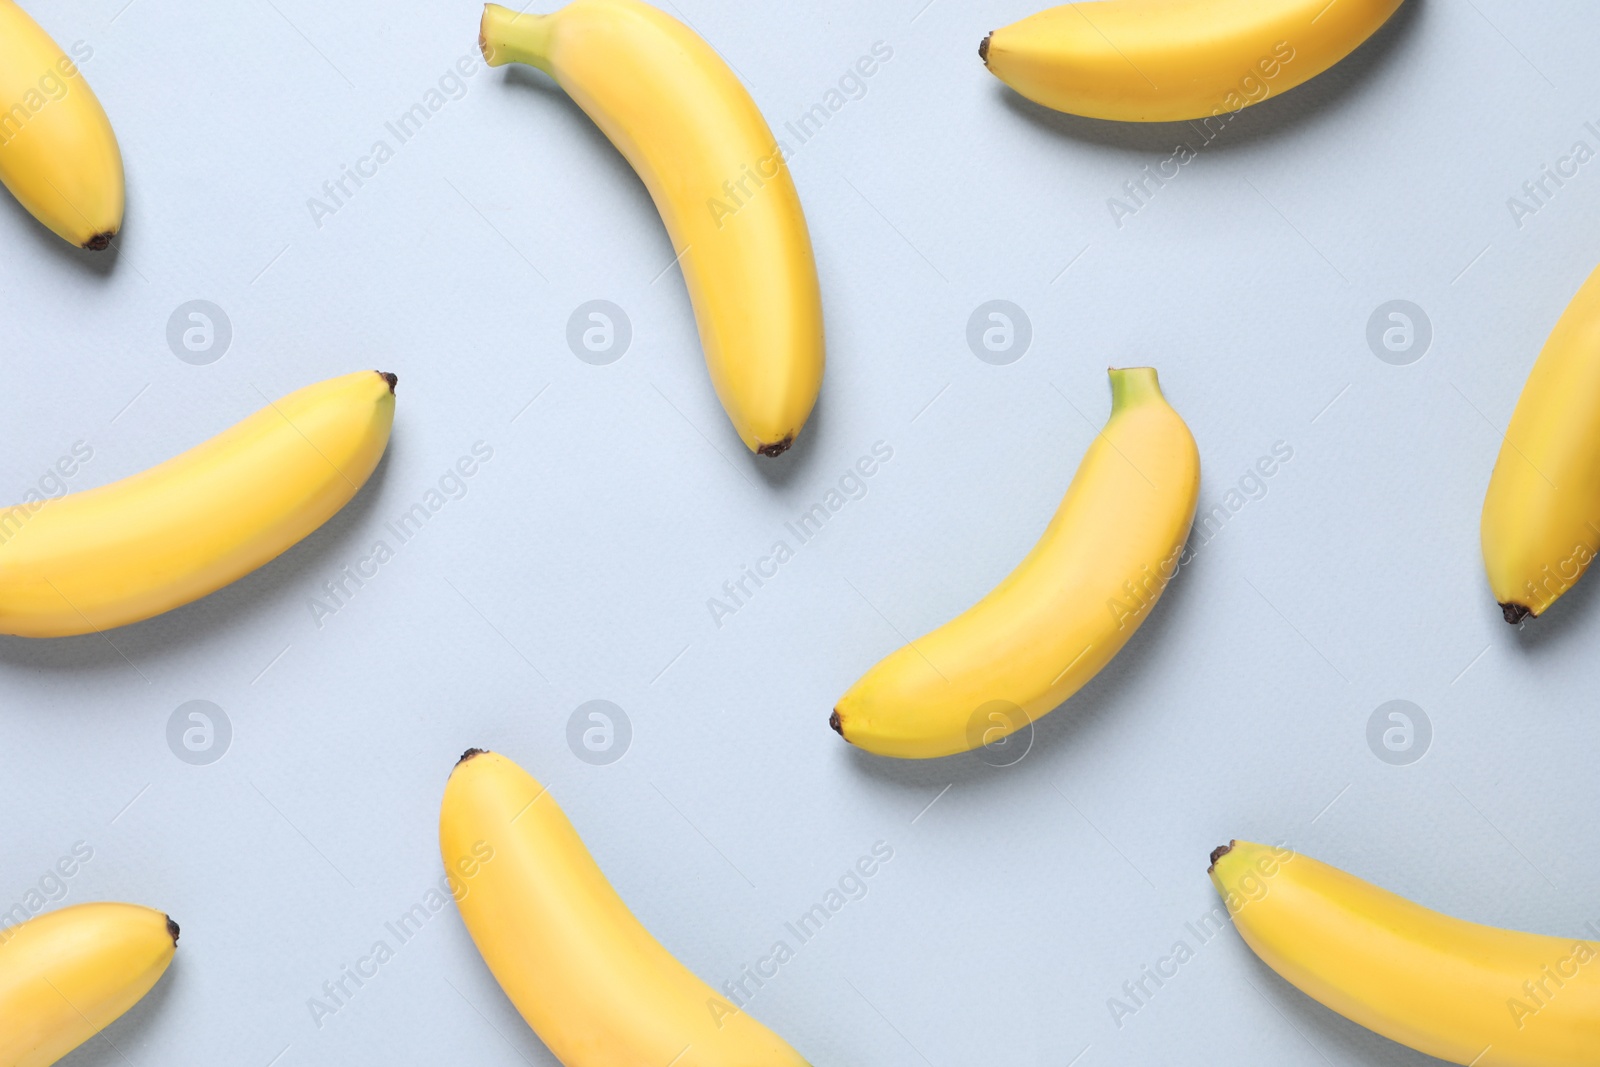 Photo of Sweet ripe baby bananas on light background, flat lay